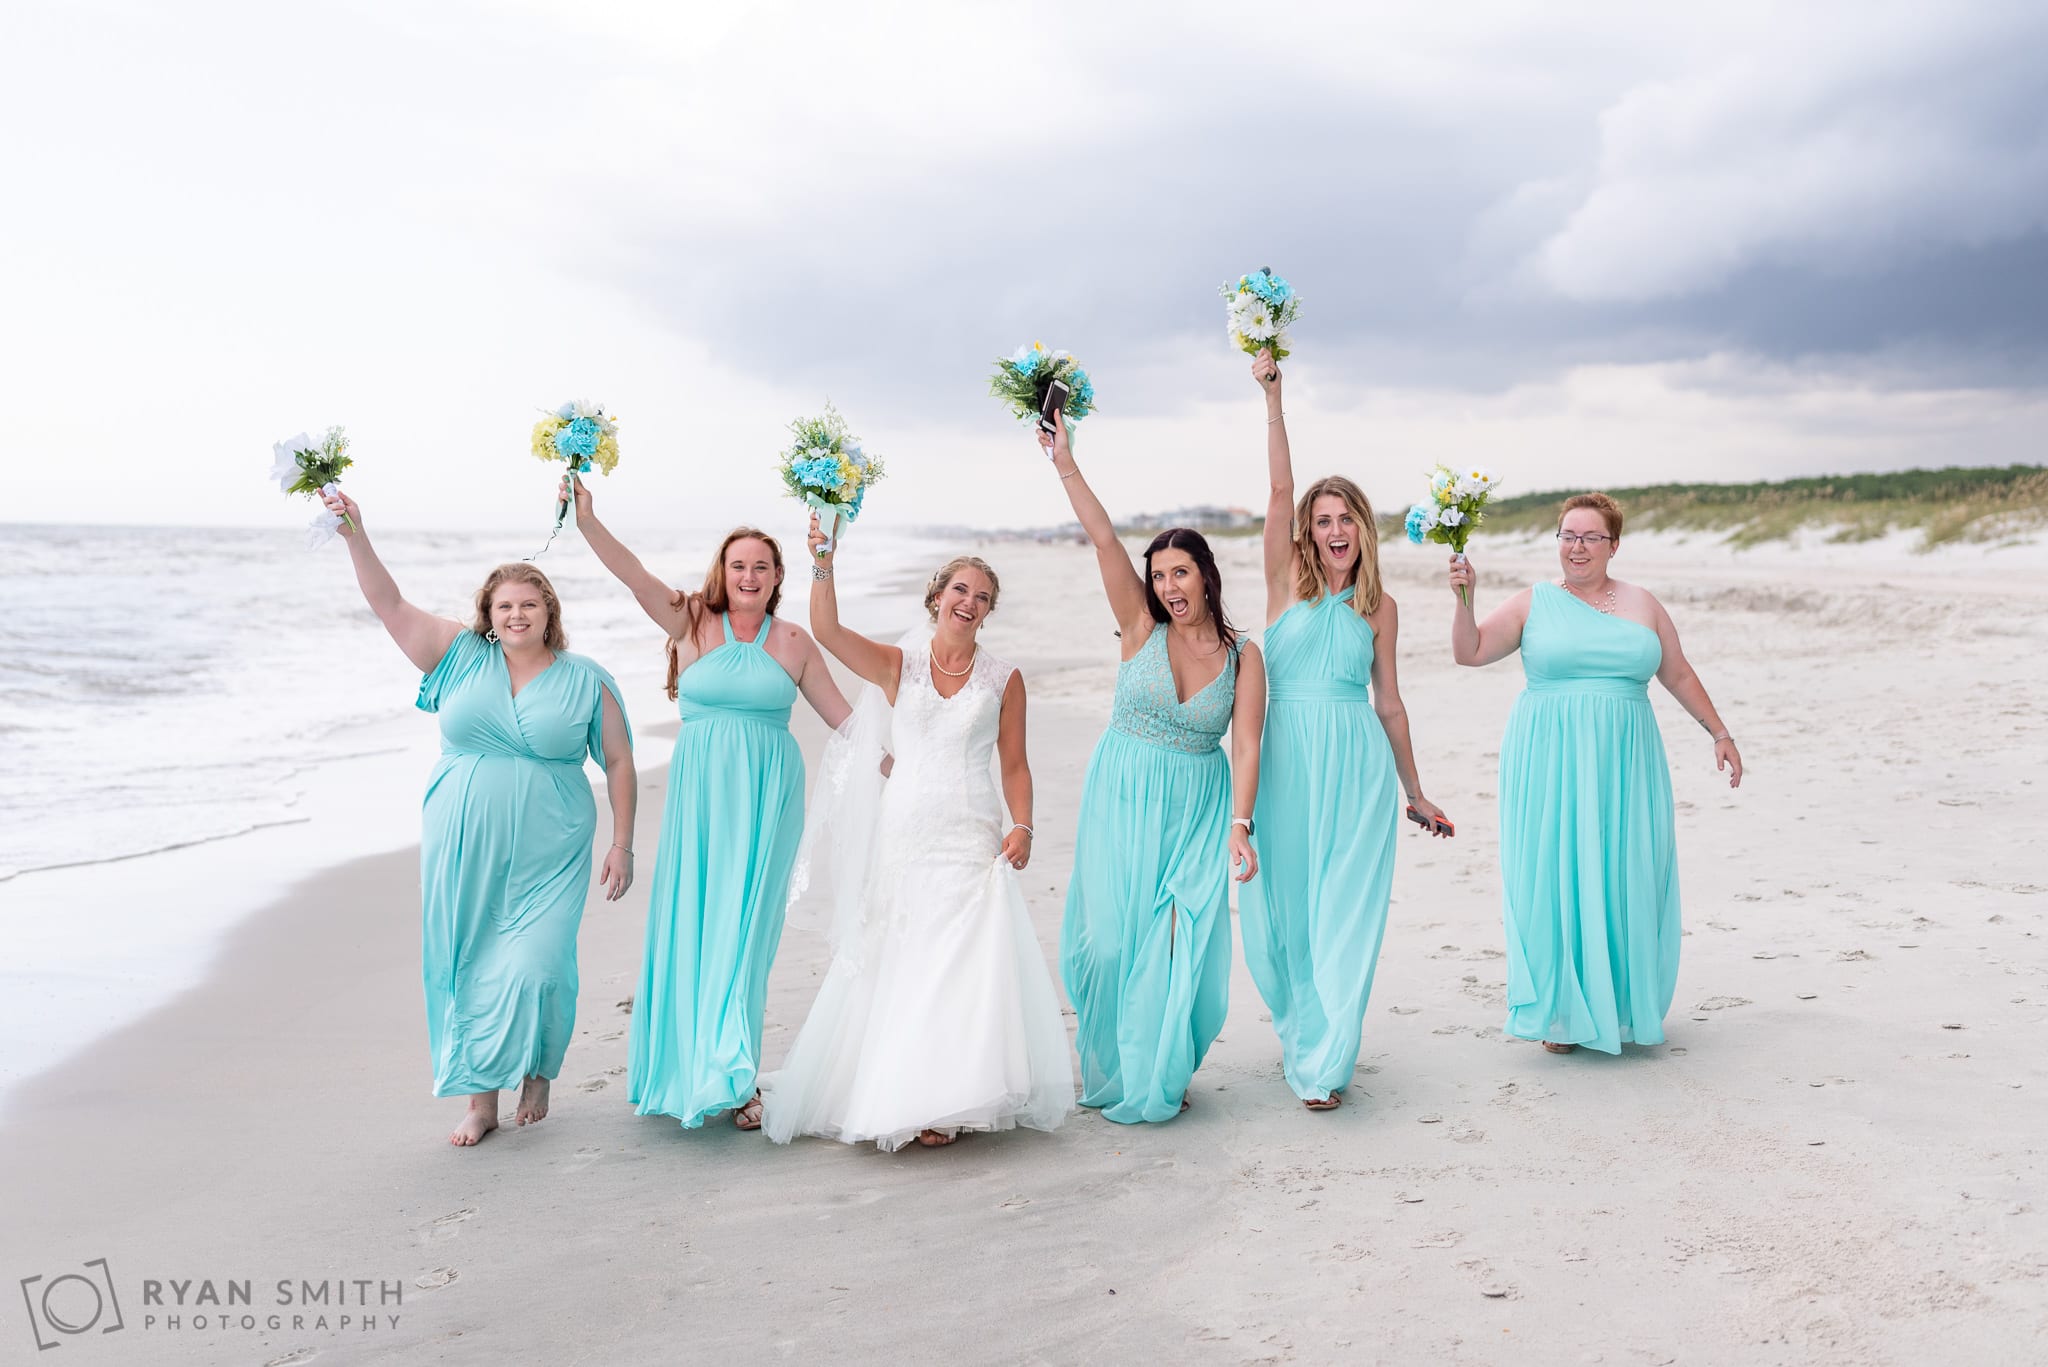 Bridesmaids walking together down the beach - Atalaya Castle - Huntington Beach State Park